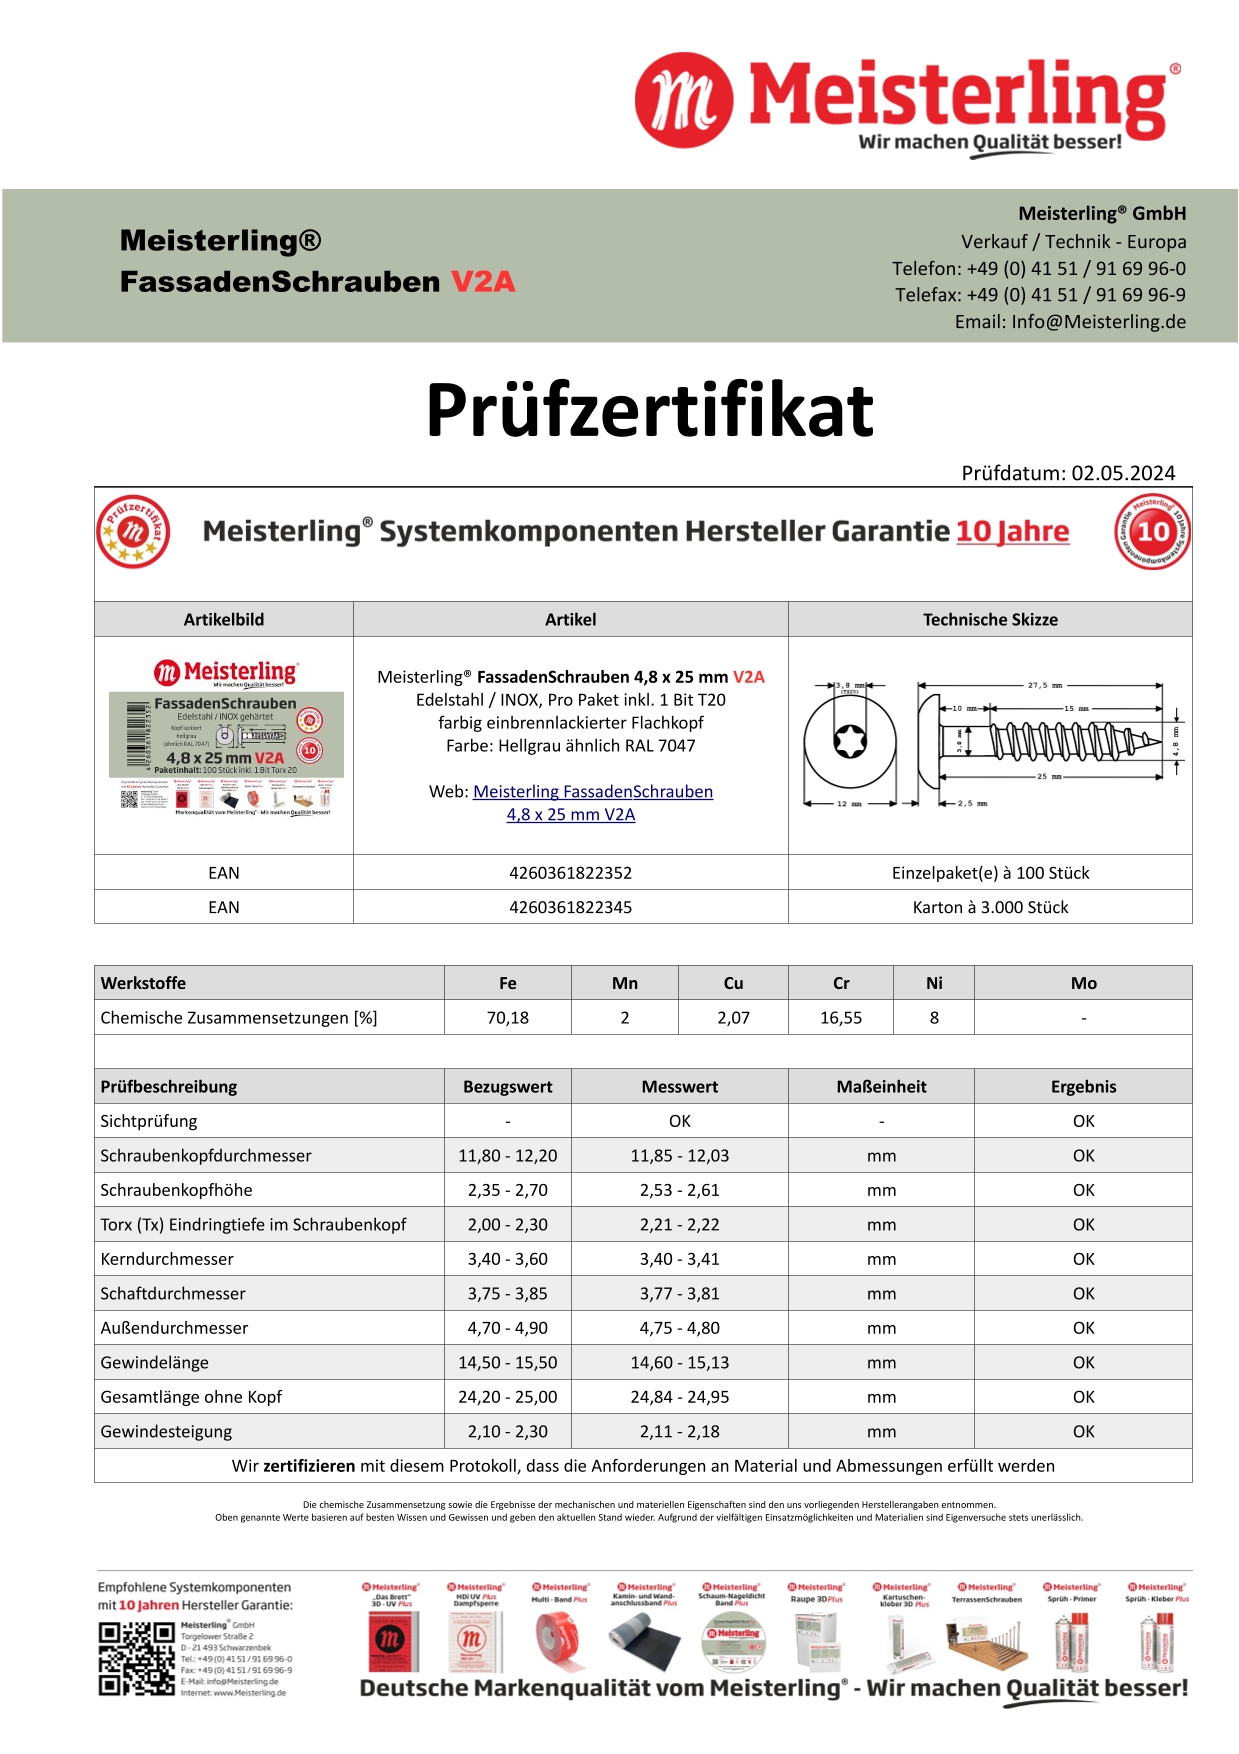 Prüfzertifikat Meisterling® FassadenSchrauben 4,8 x 25 mm V2a hellgrau